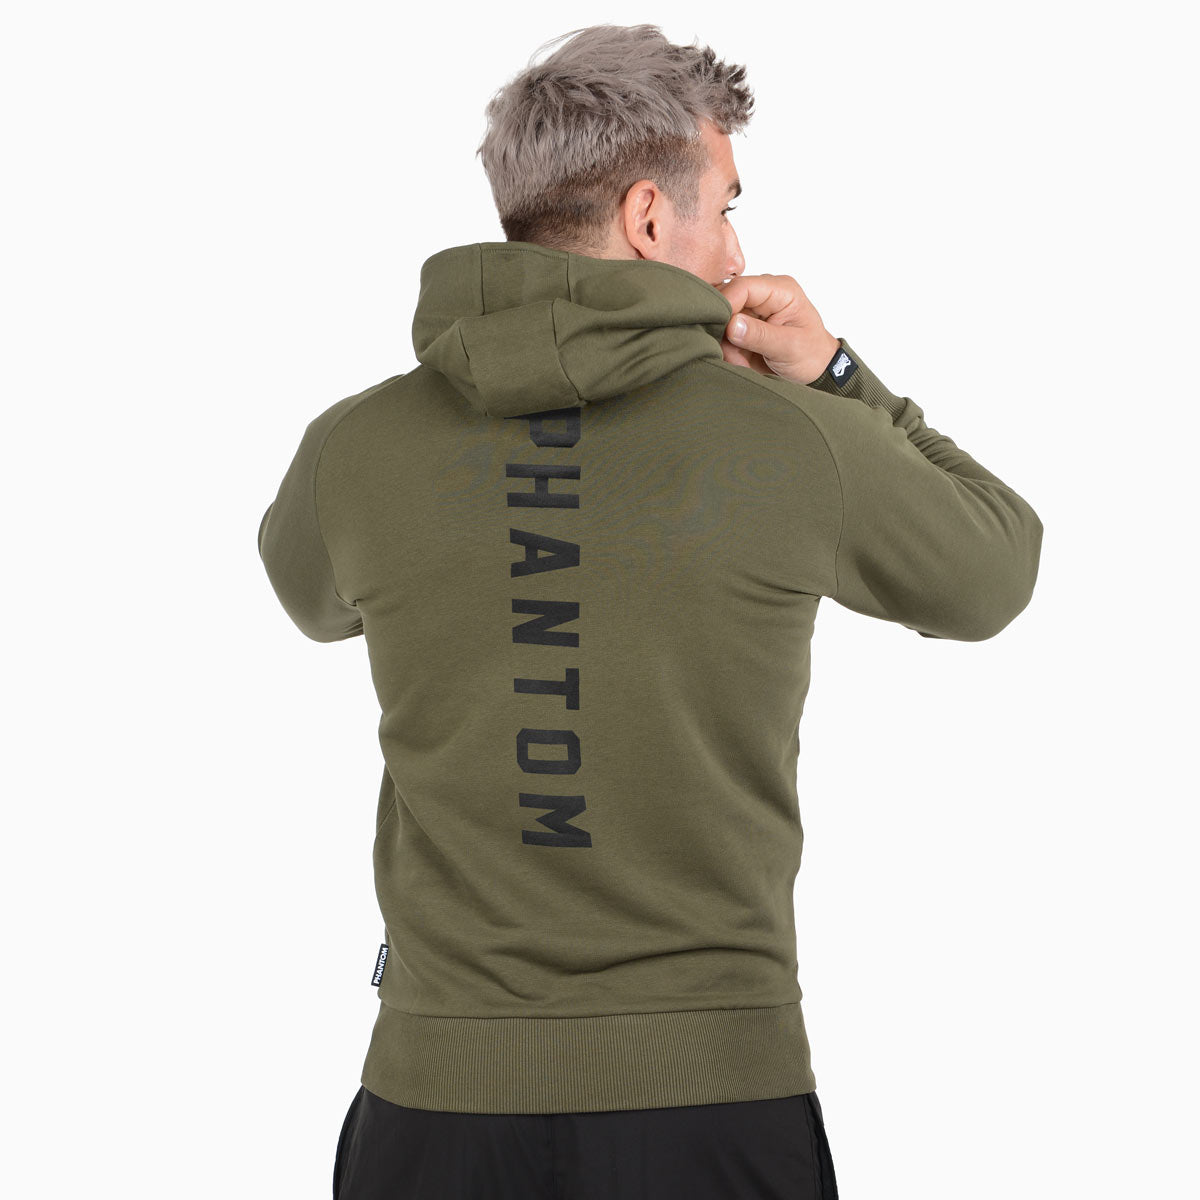 Hoodie elite army  martial arts sweater - PHANTOM ATHLETICS